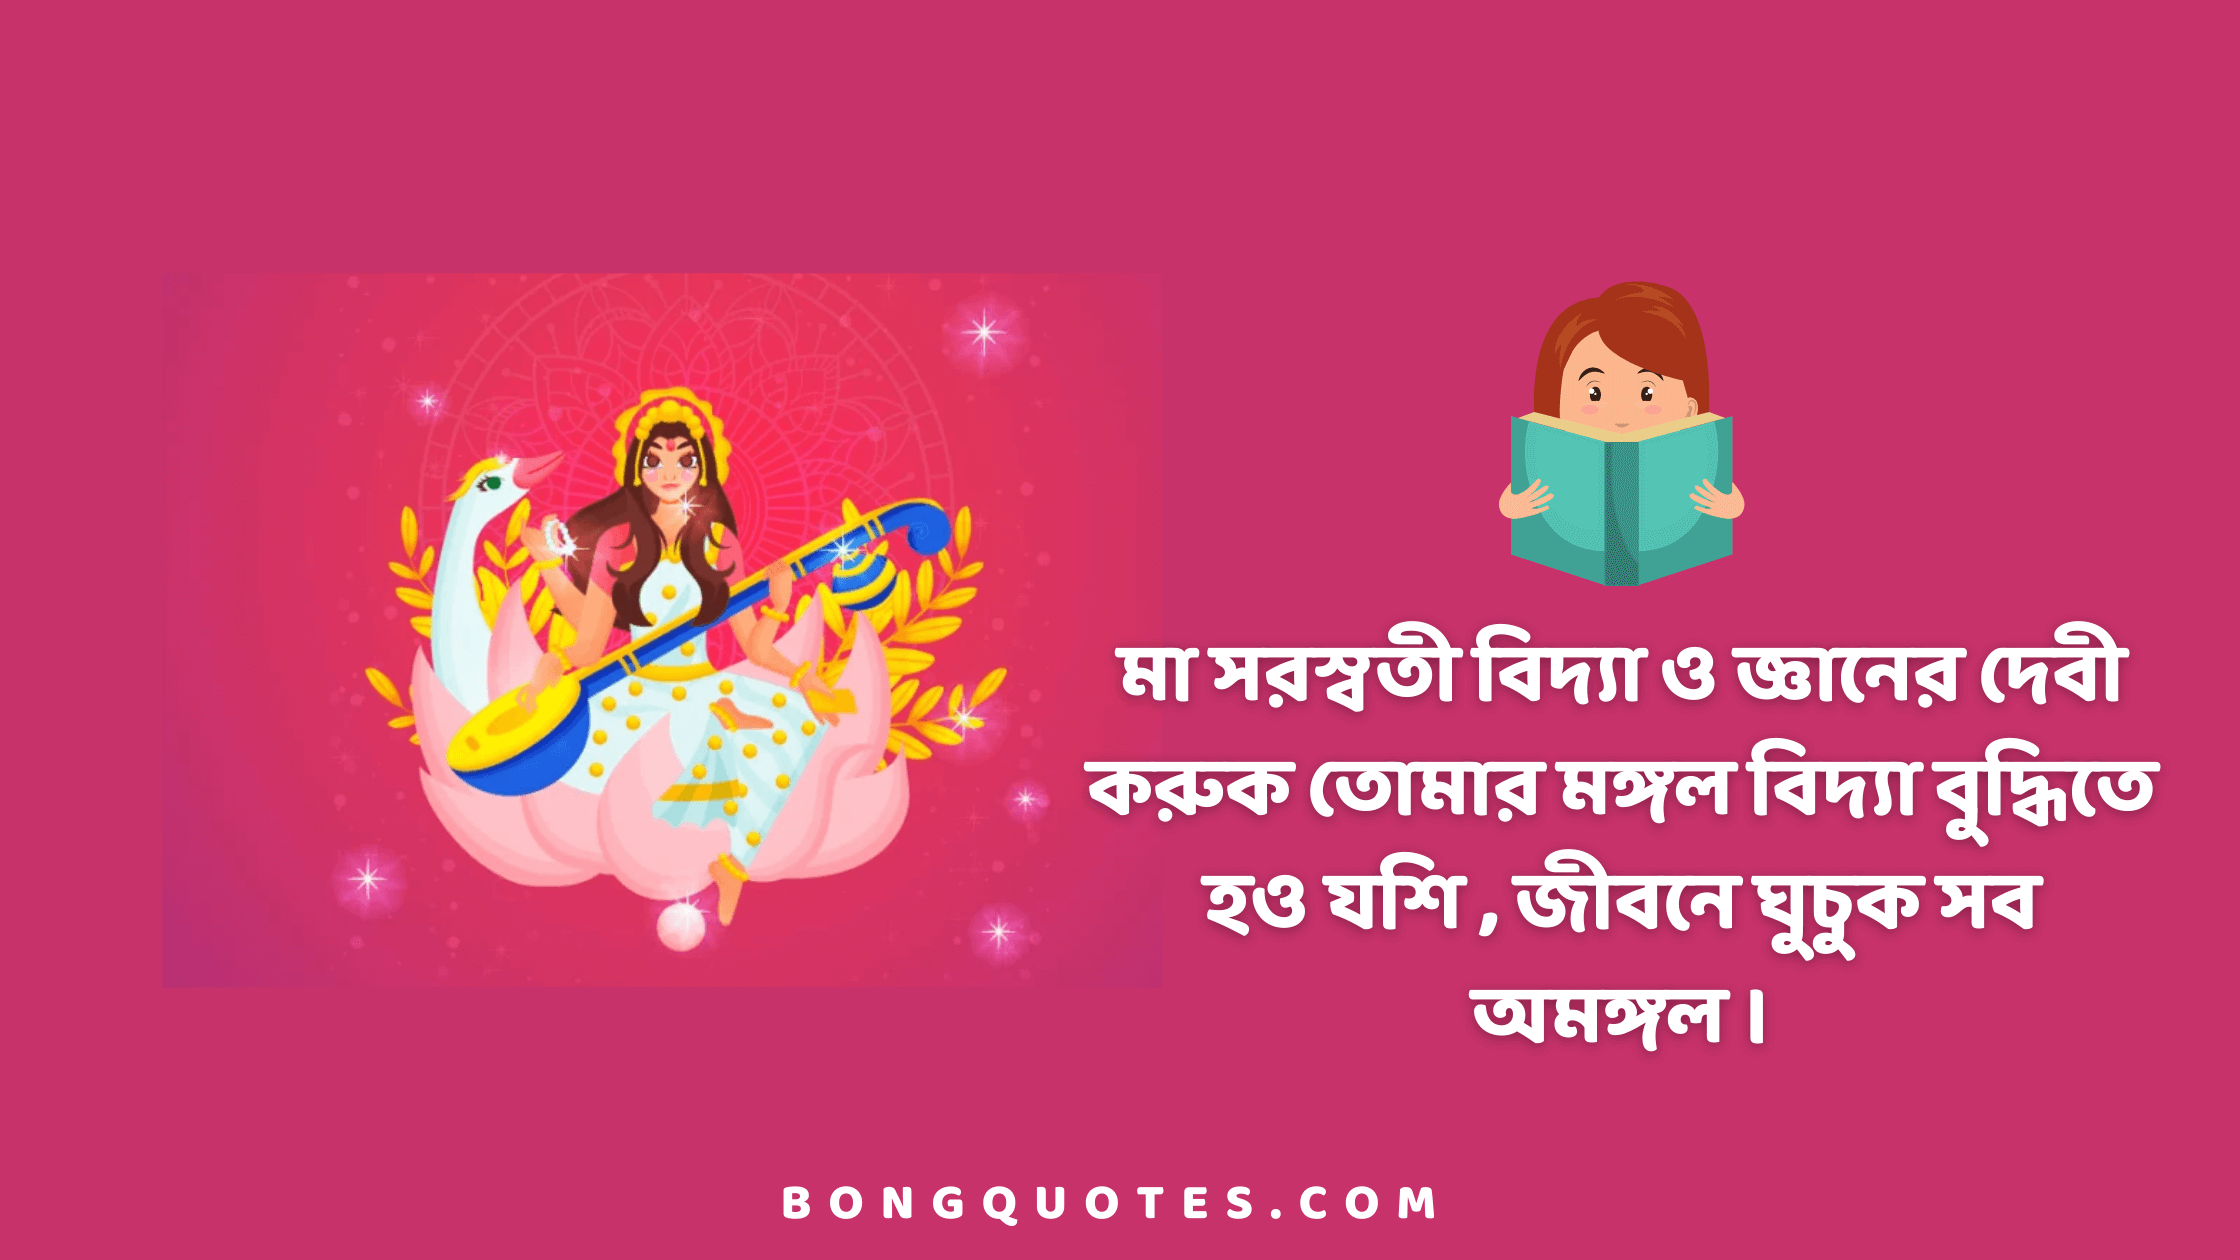 saraswati quotes and captions in bangla